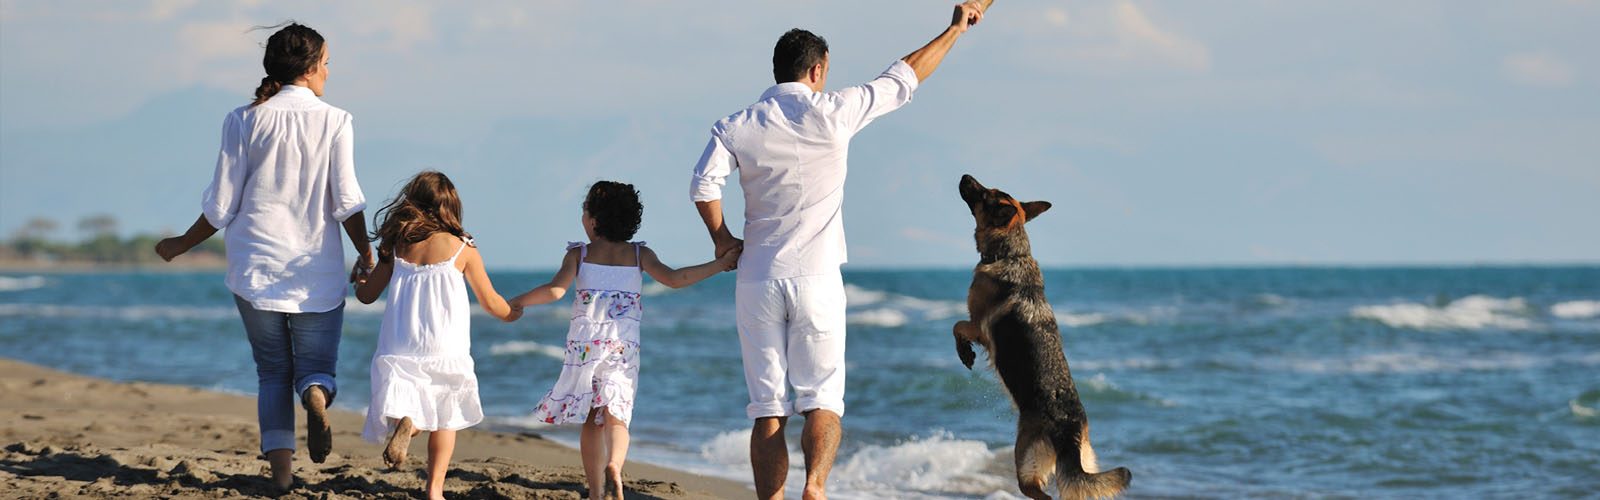 Family on a beach walking their dog.